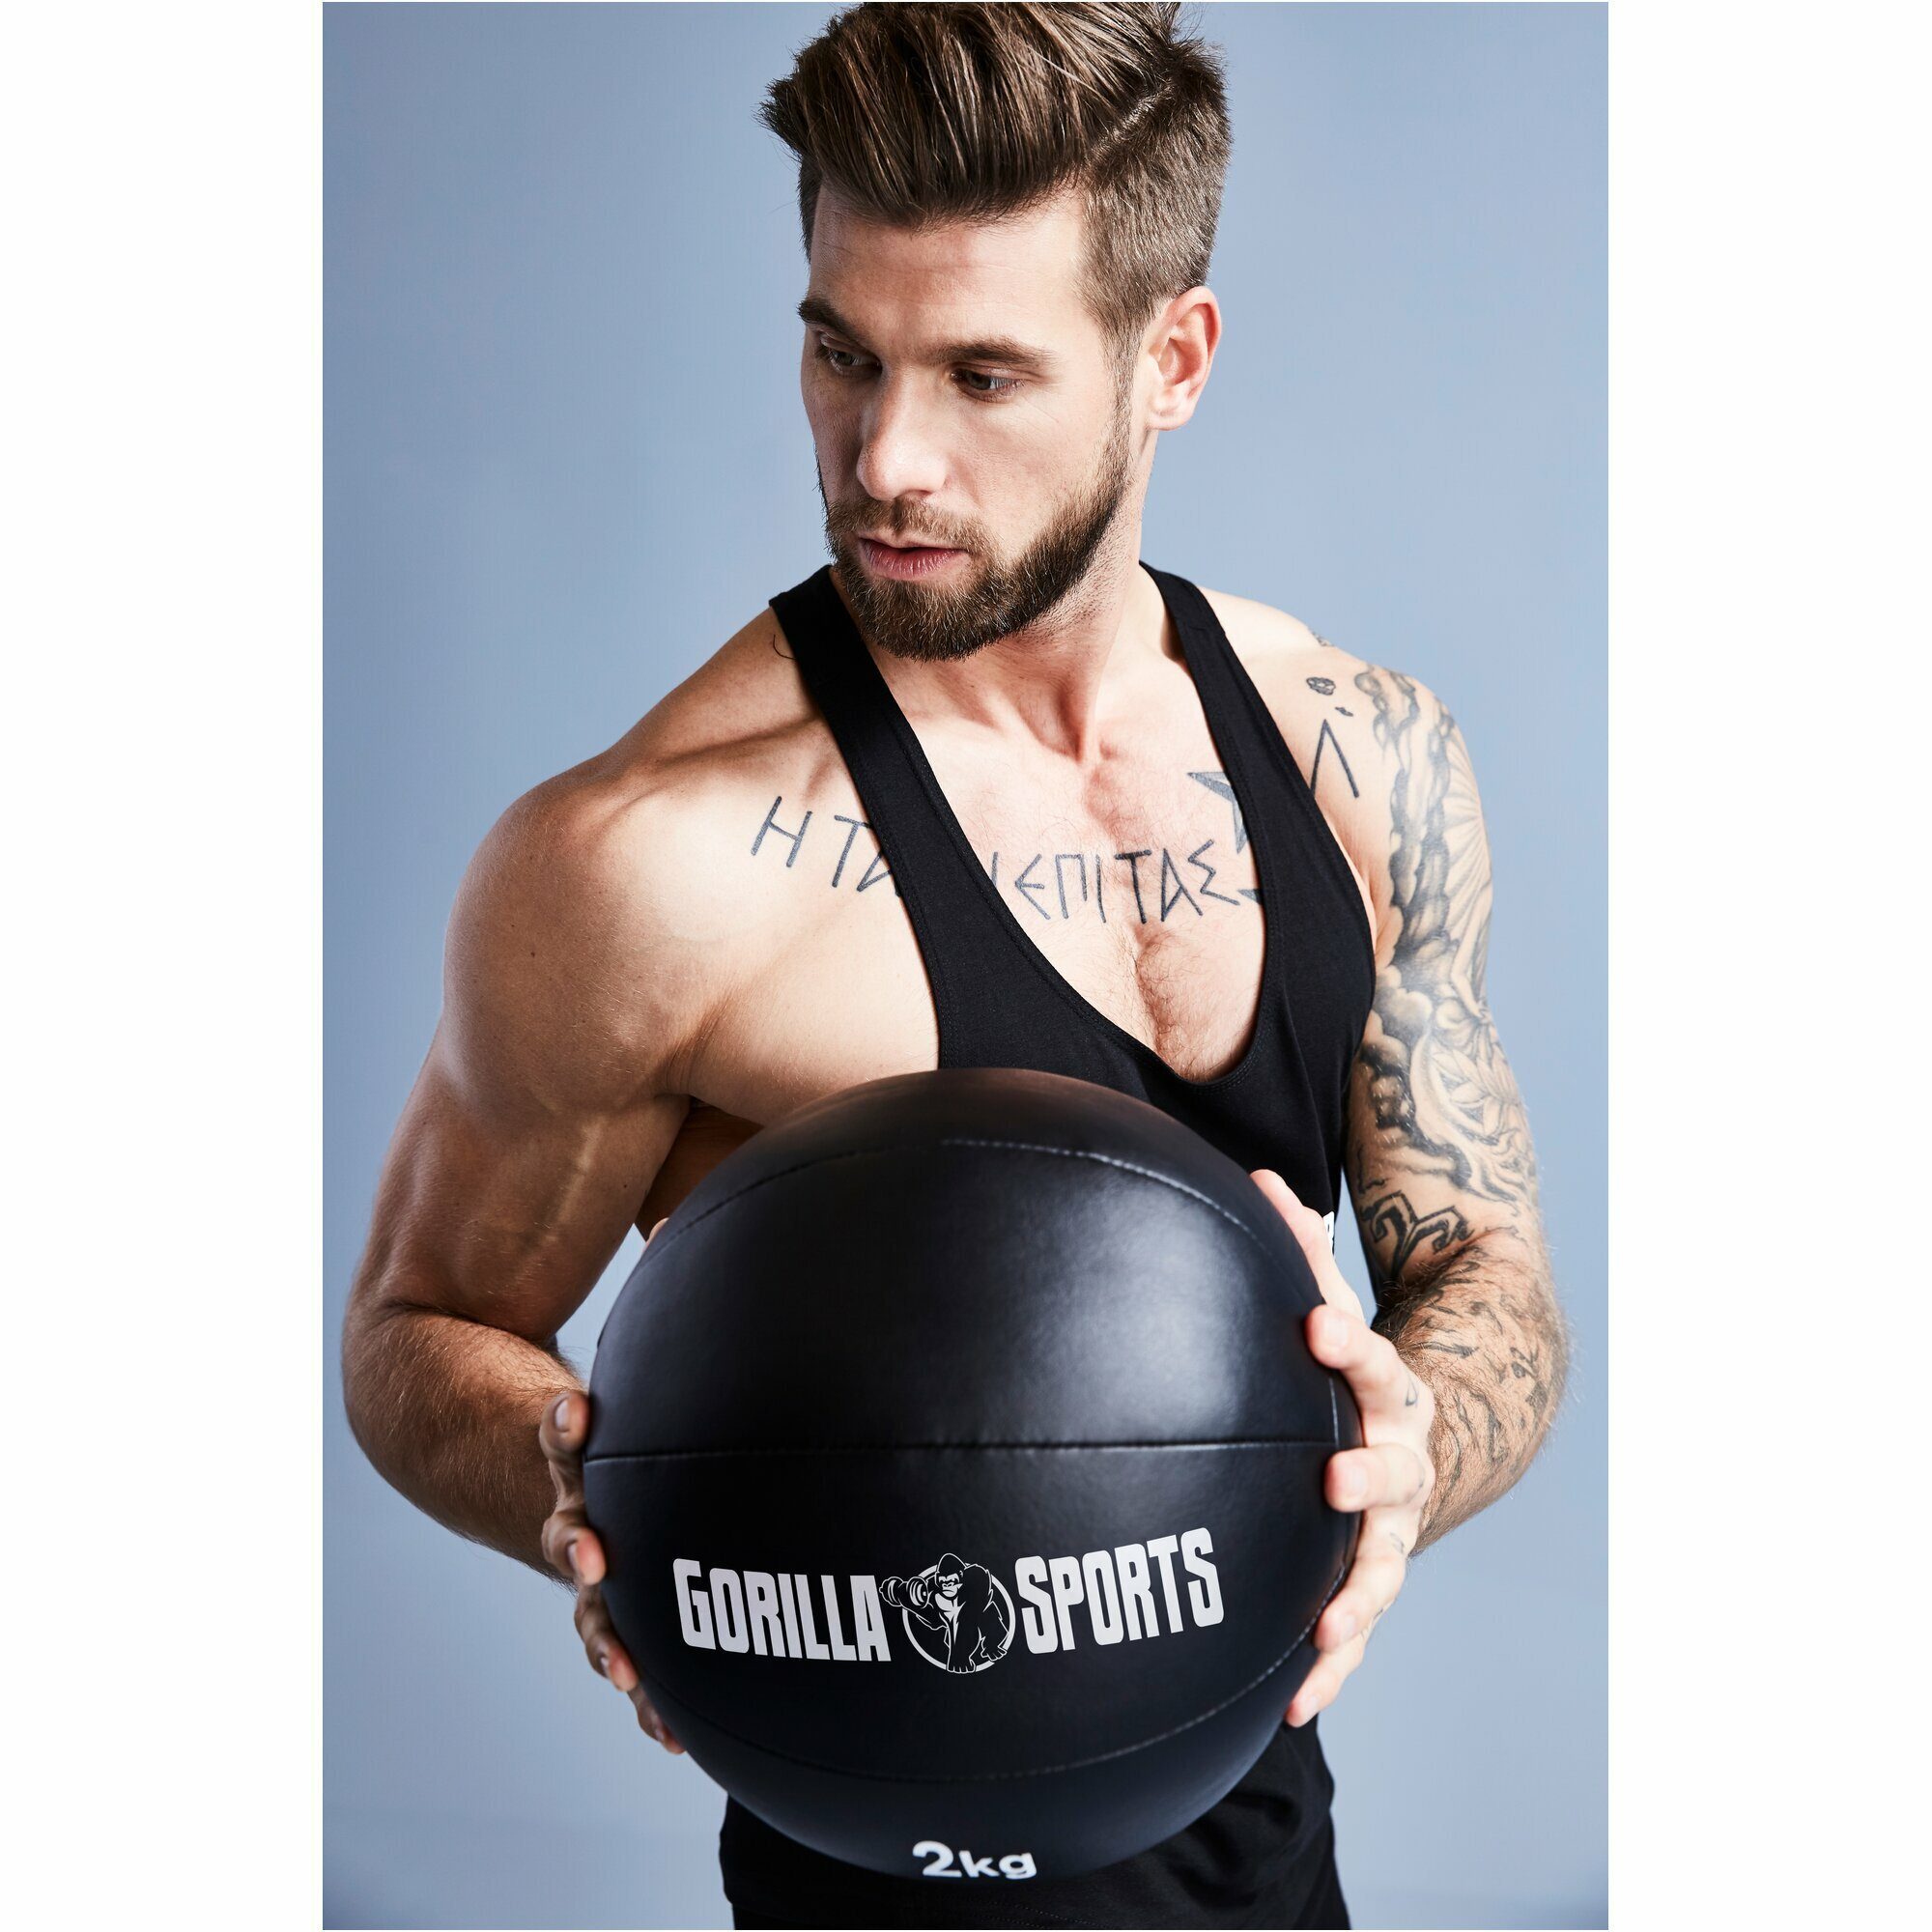 SPORTS kg Leder, Gewichtsball GORILLA Trainingsball, Einzeln/Set, Medizinball Fitnessball, 3 aus 29cm,